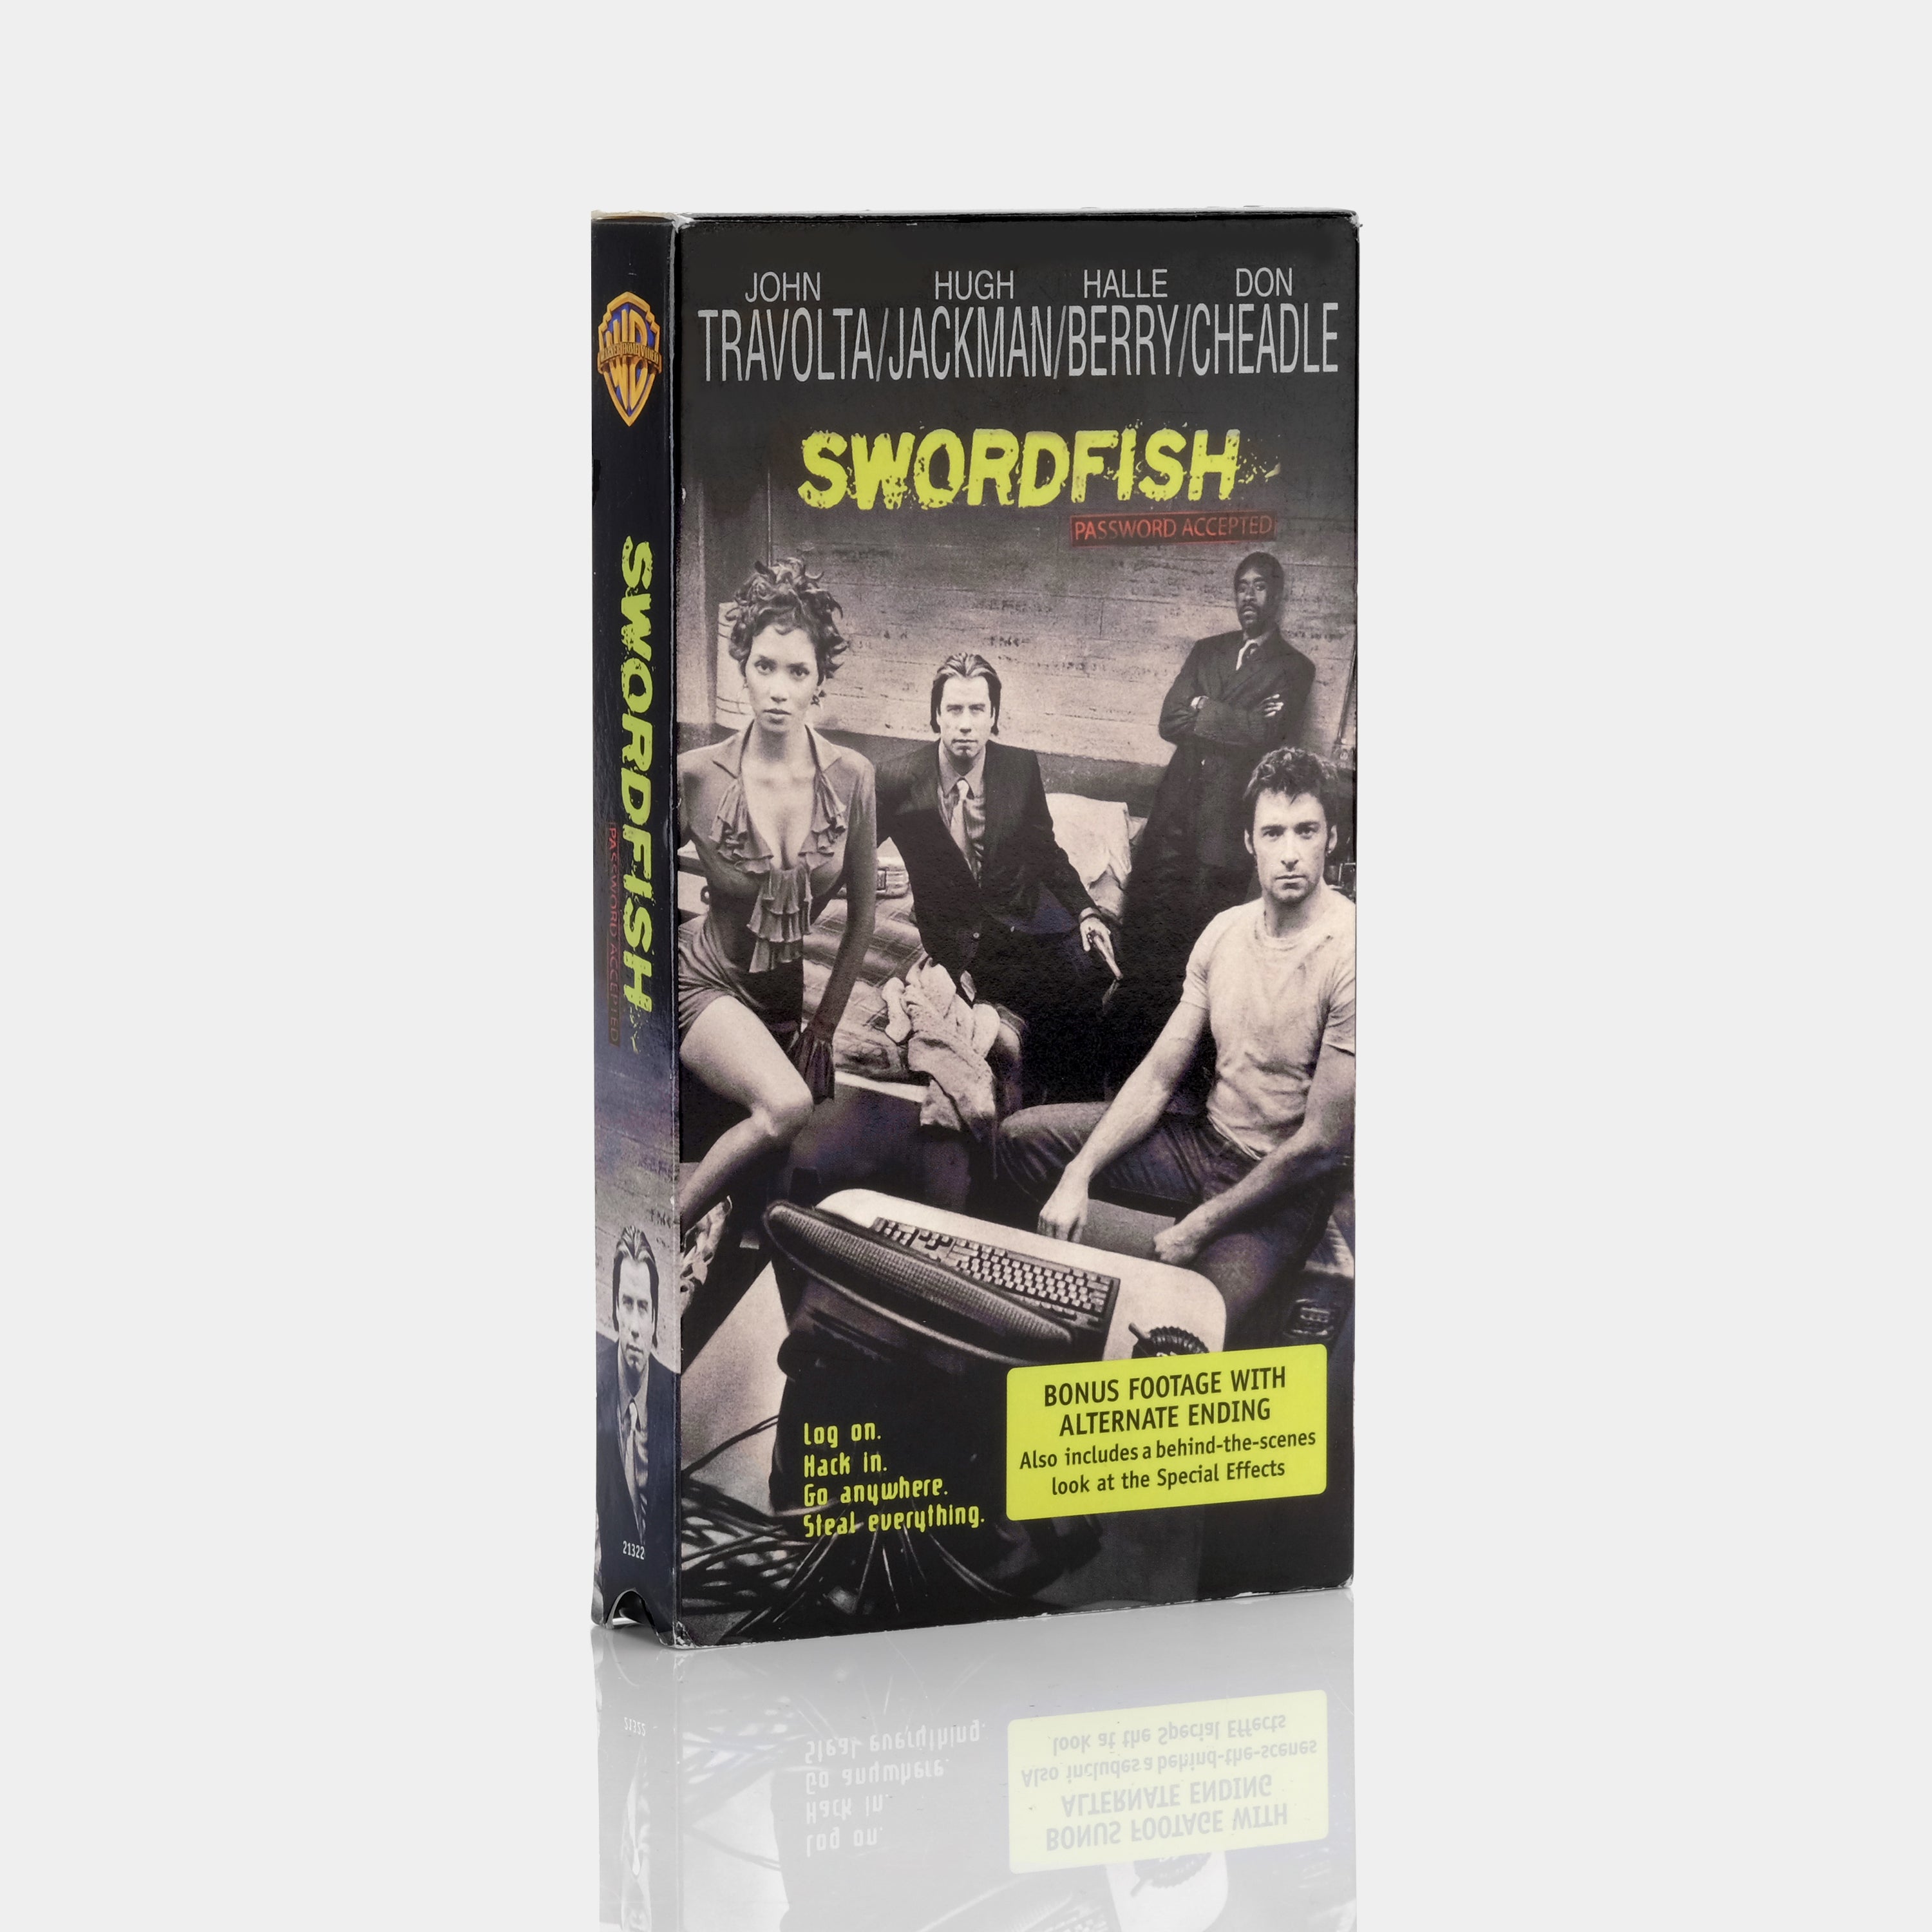 Swordfish VHS Tape